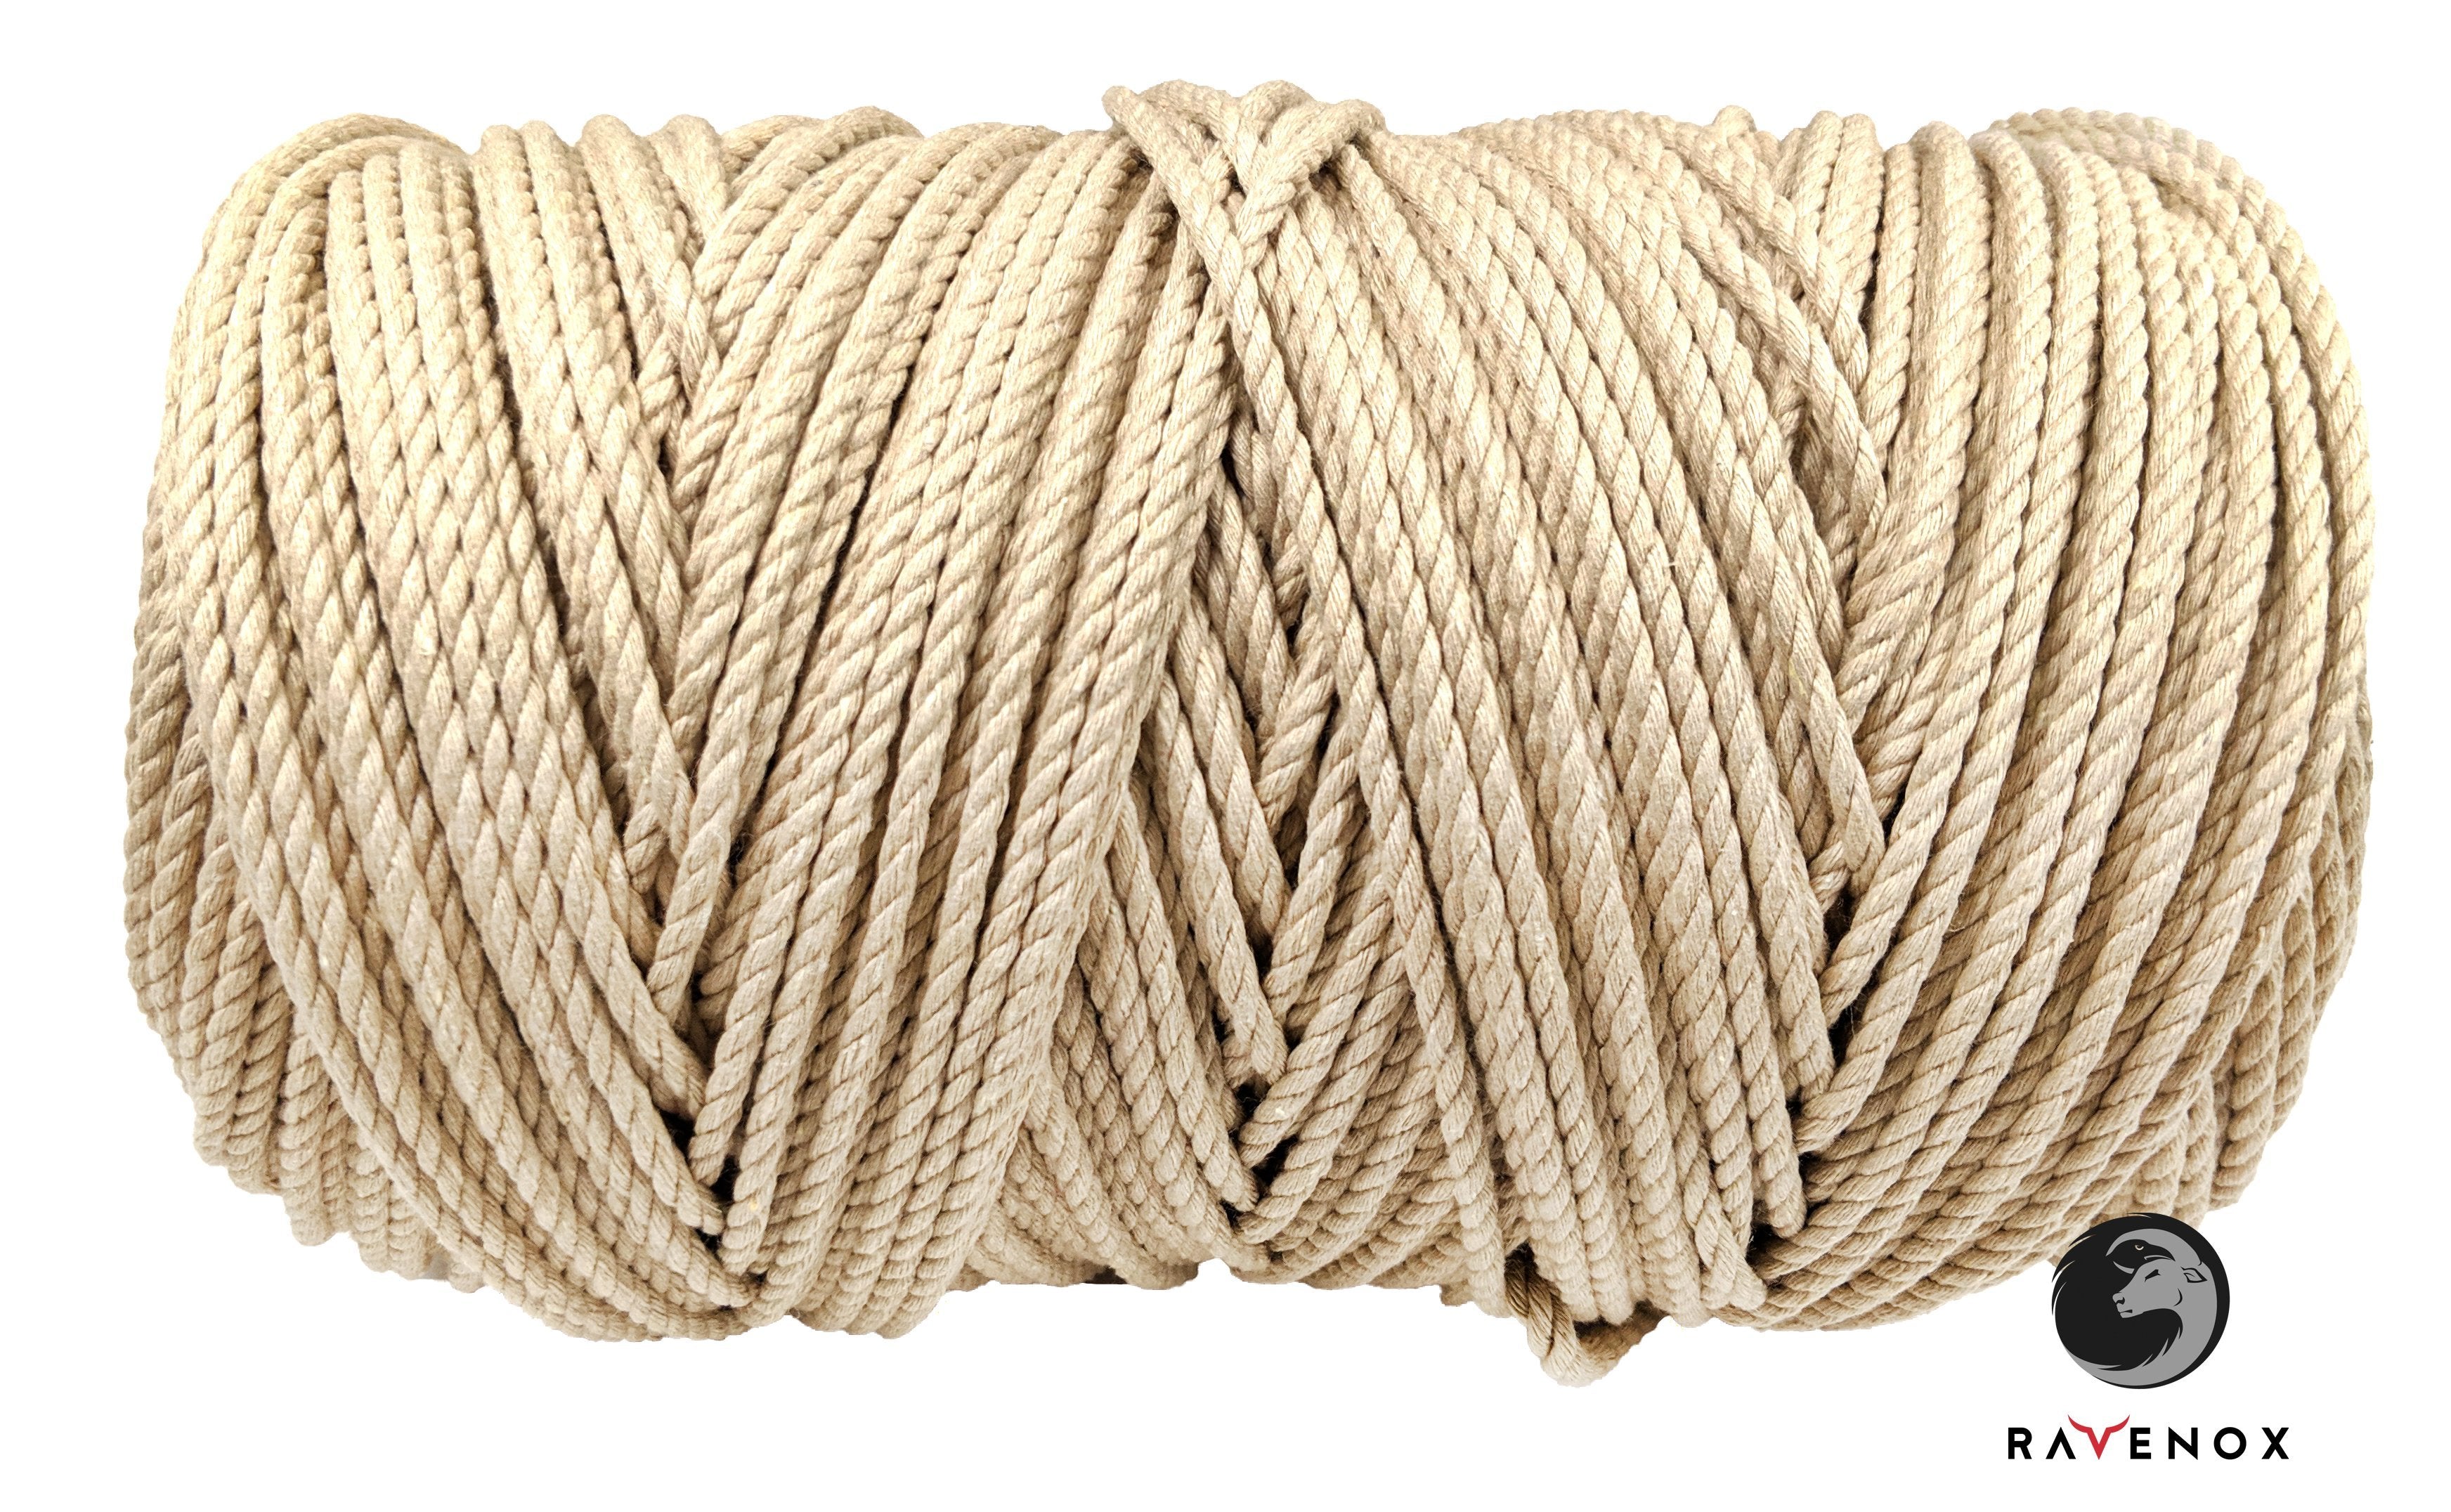 Ravenox Tan Cotton Macramé Cord | Natural Cord for Macramé Projects 3 mm x 16 Yards